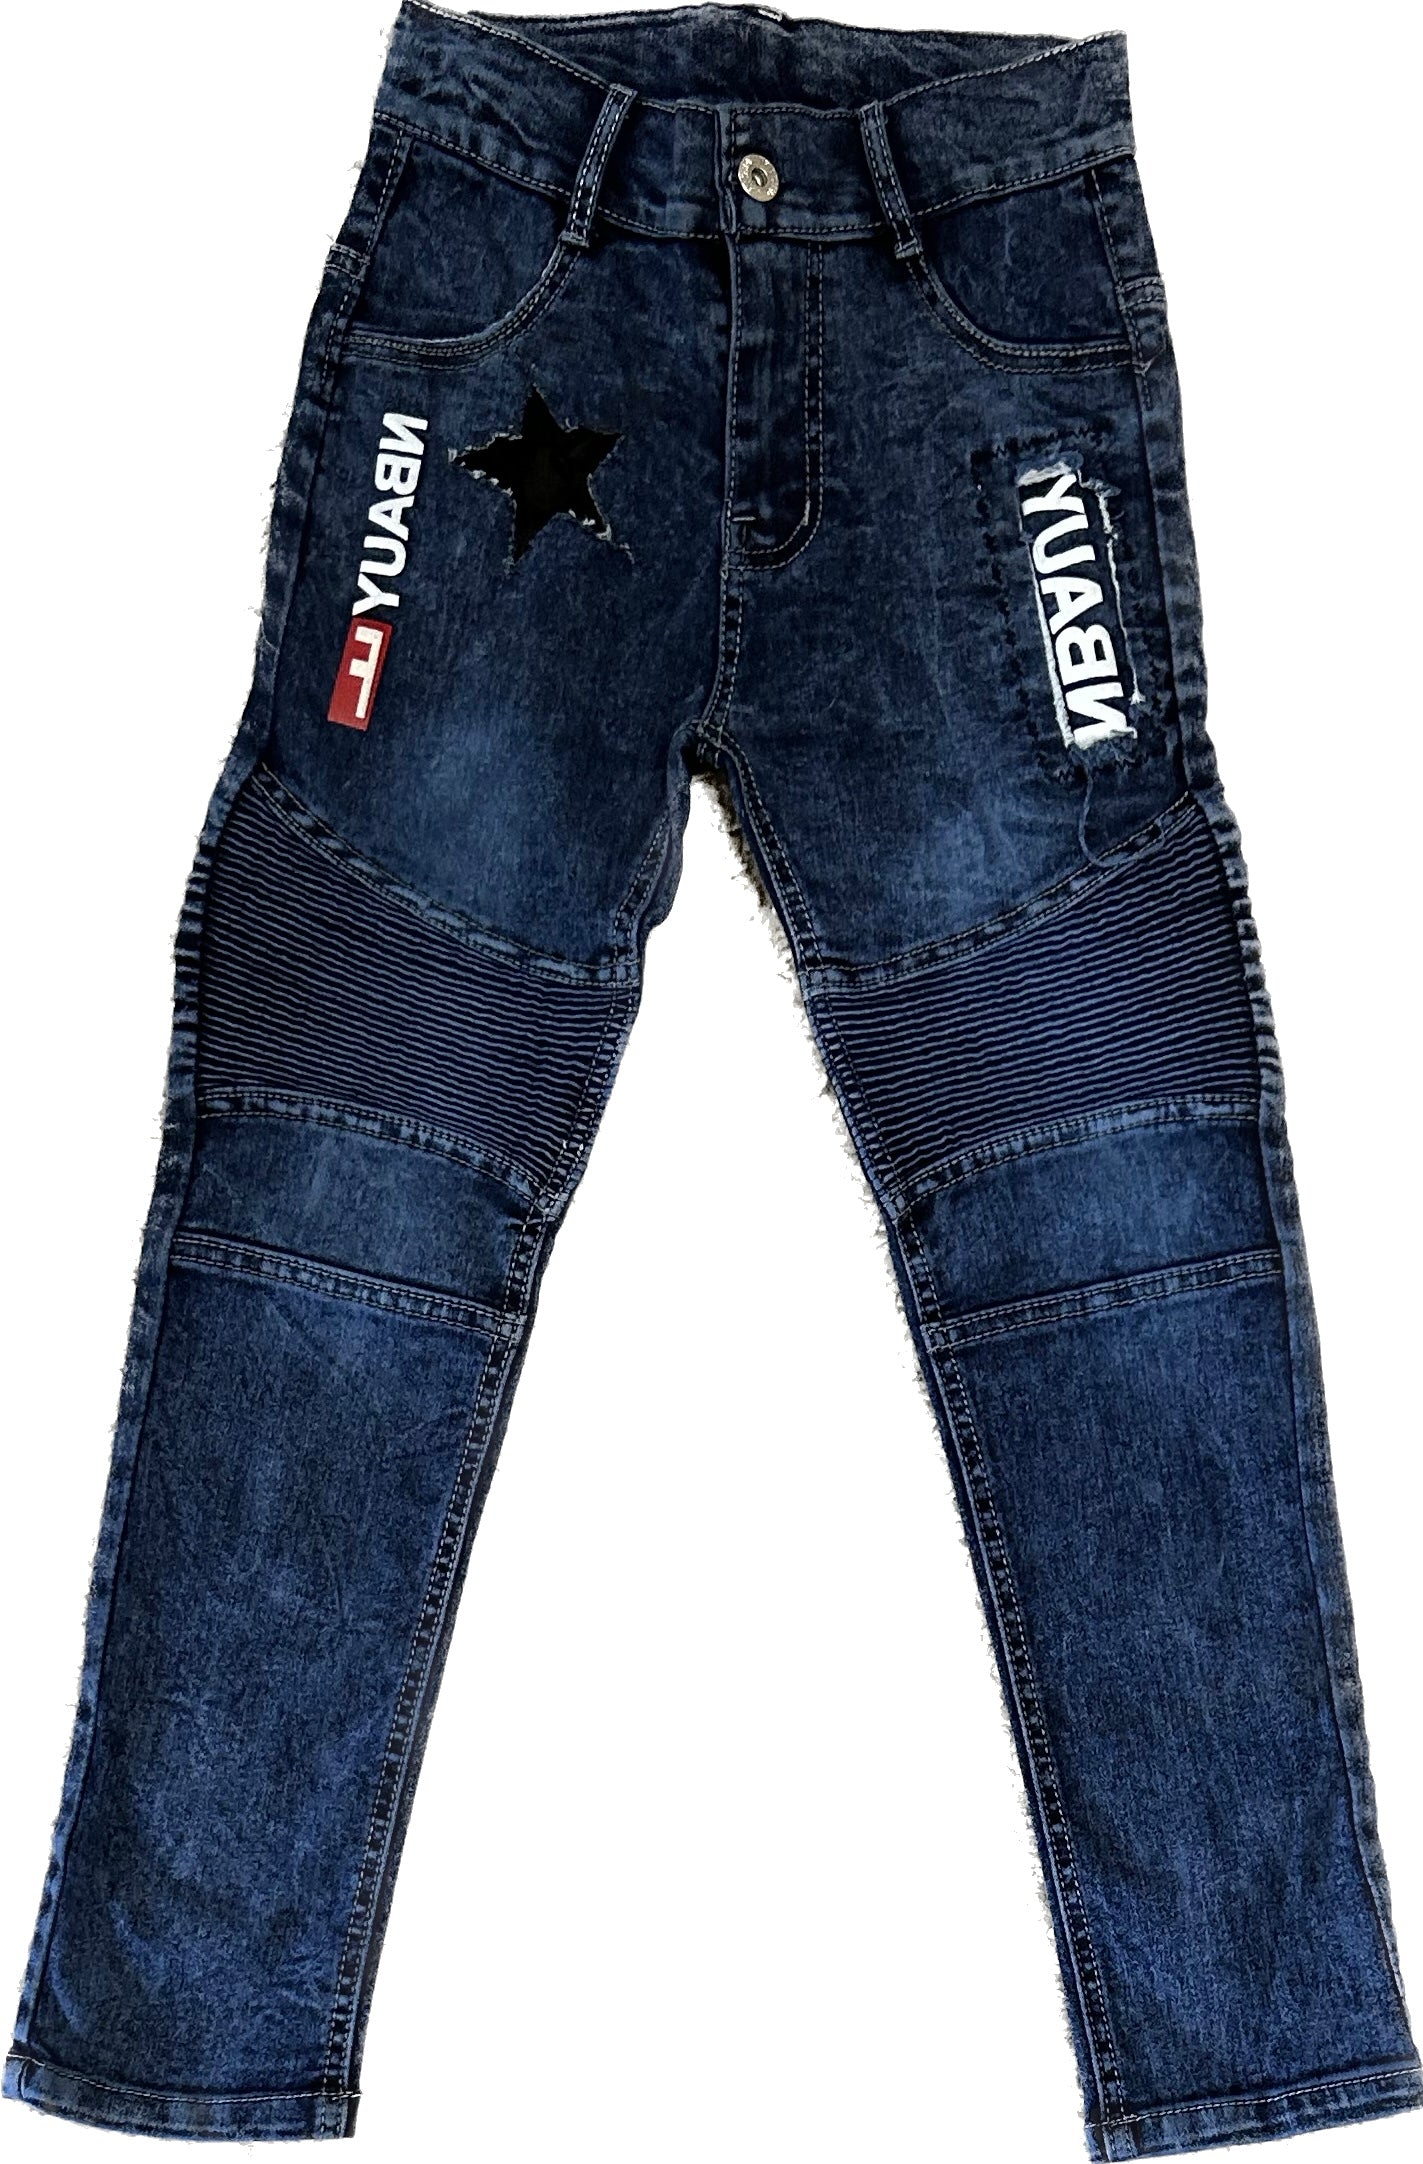 Boys Black-Star Designer Jeans